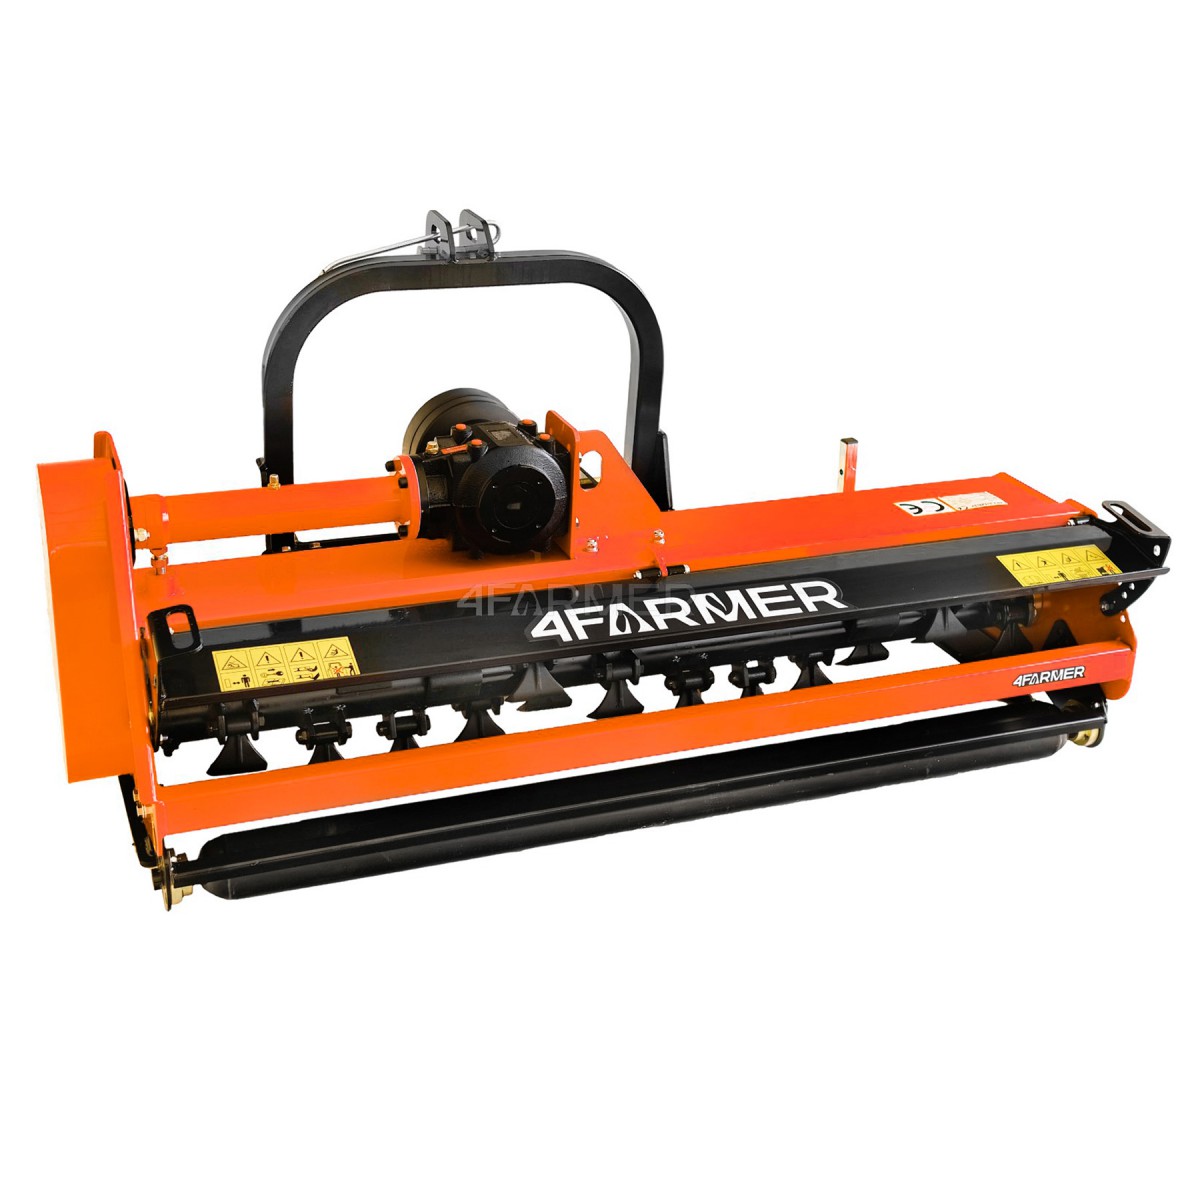 EFGC 175D 4FARMER flail mower - orange